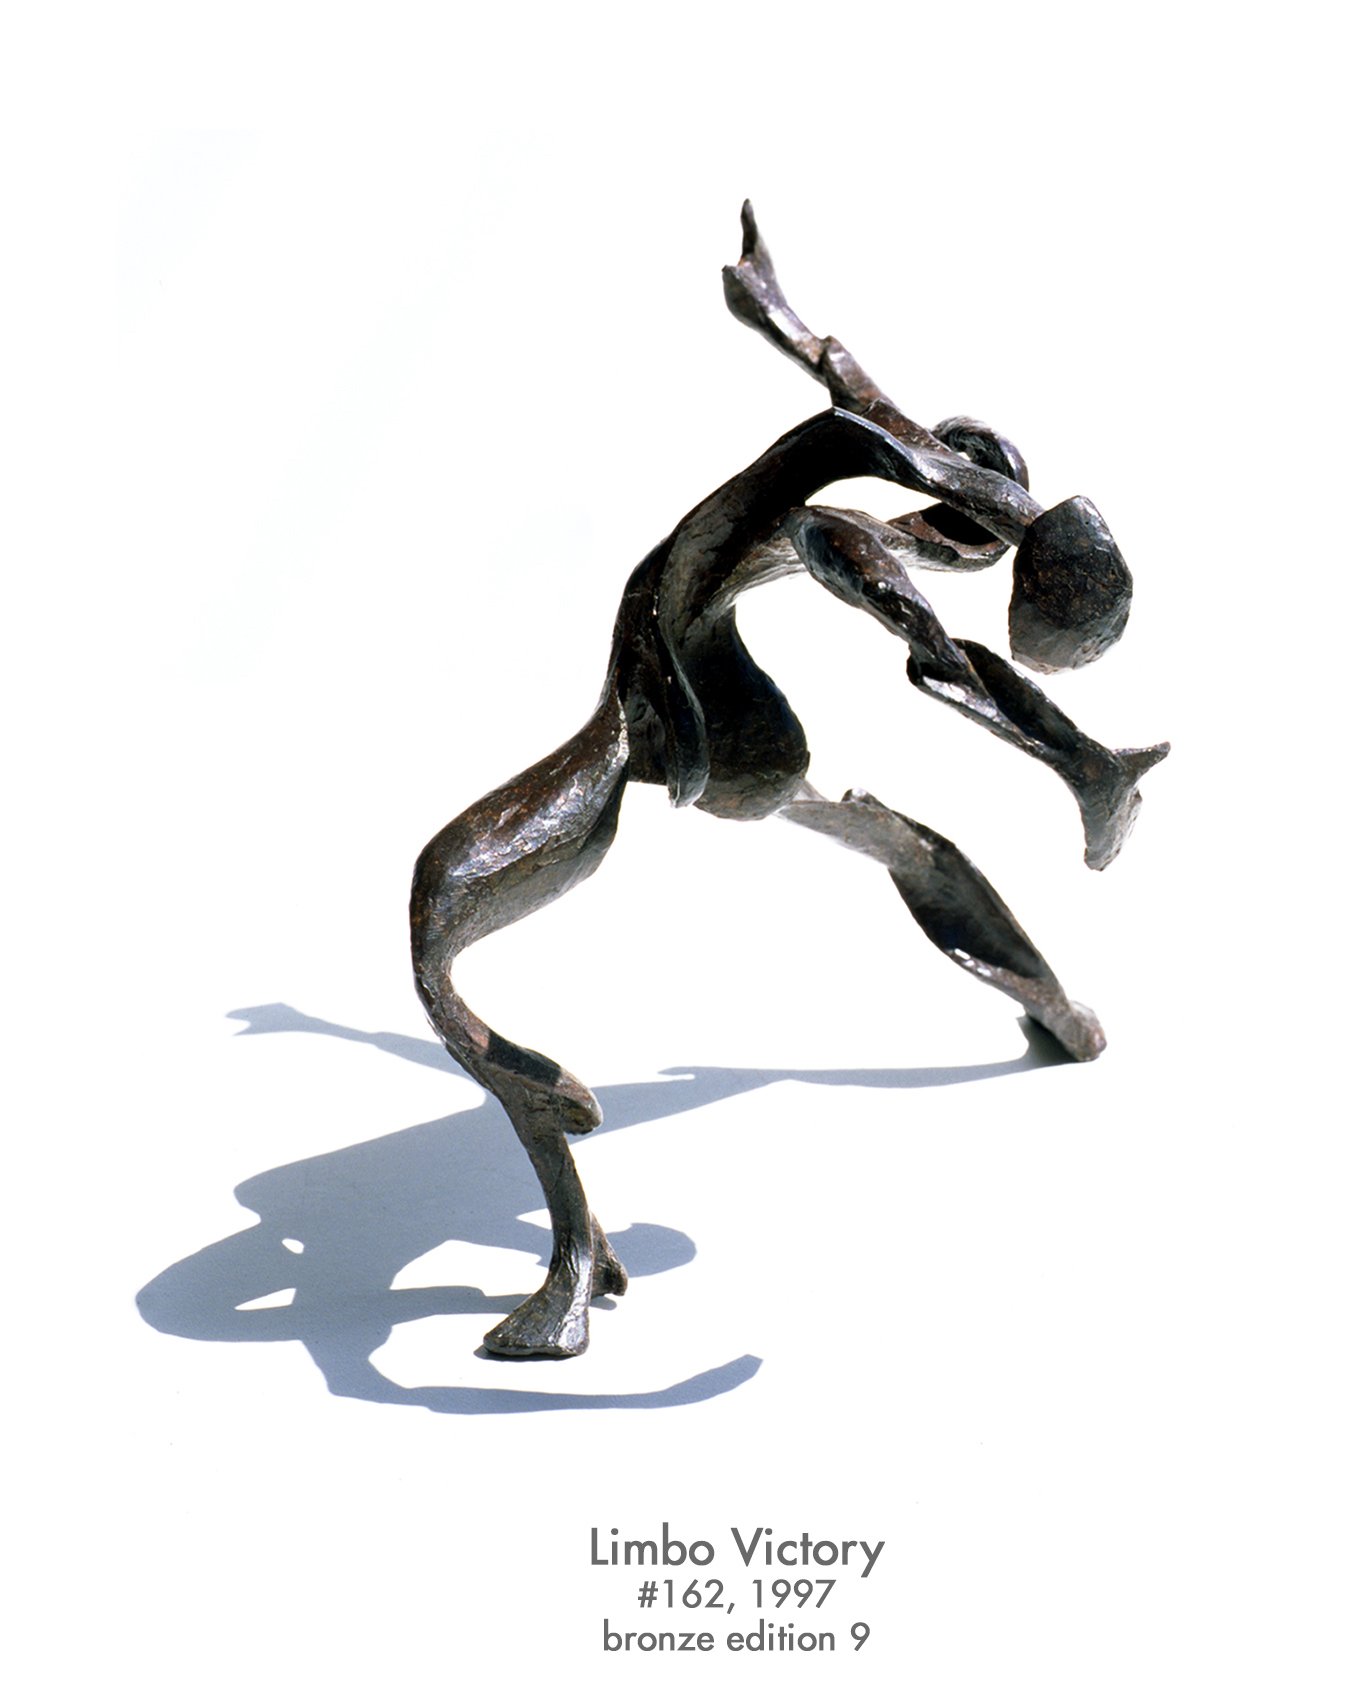 Limbo Victory, 1997, bronze, #162